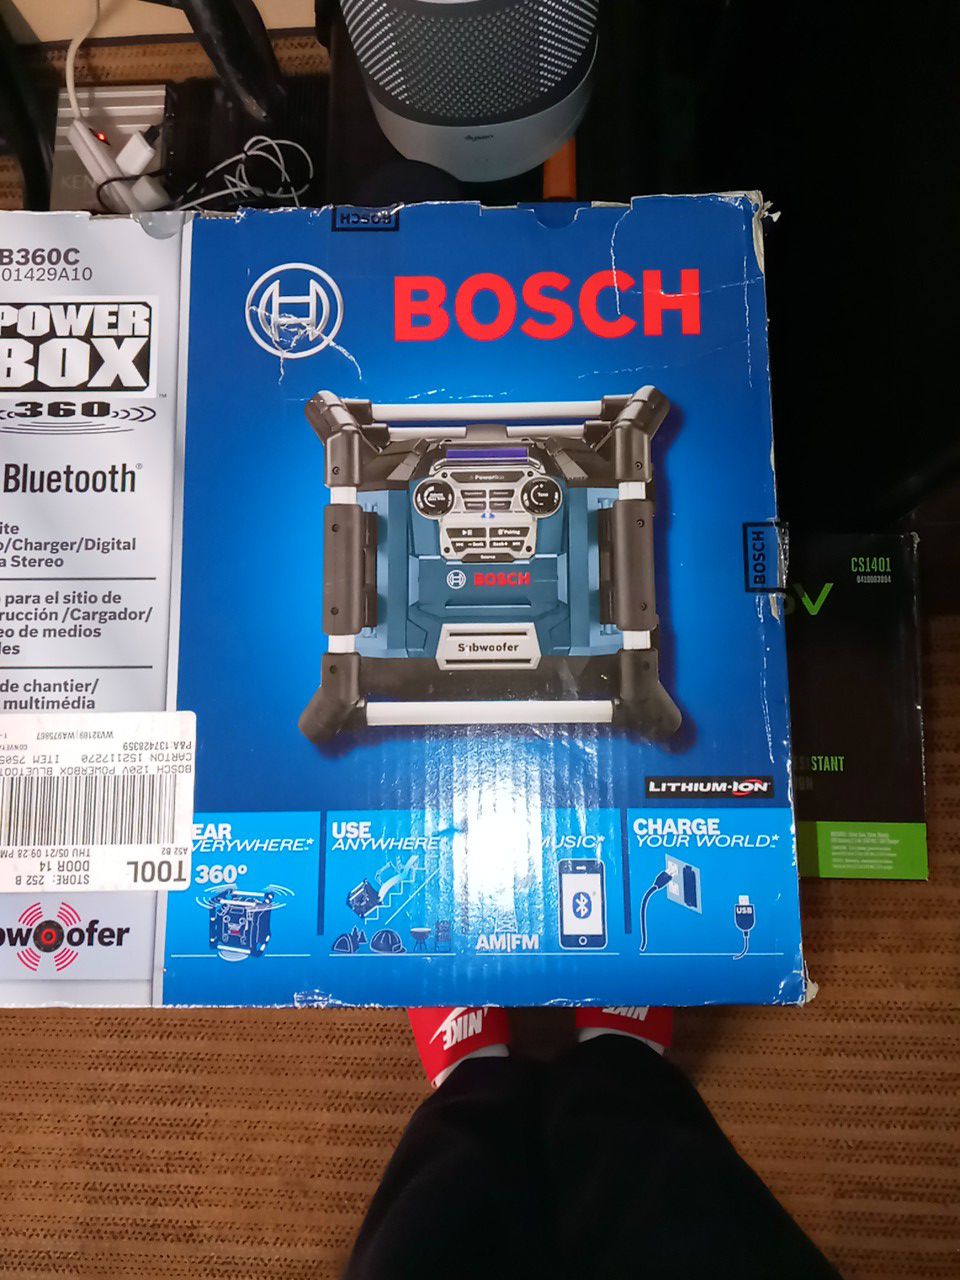 BOSCH POWER BOX (360).. Bluetooth job site radio/charger/digital media stereo!!